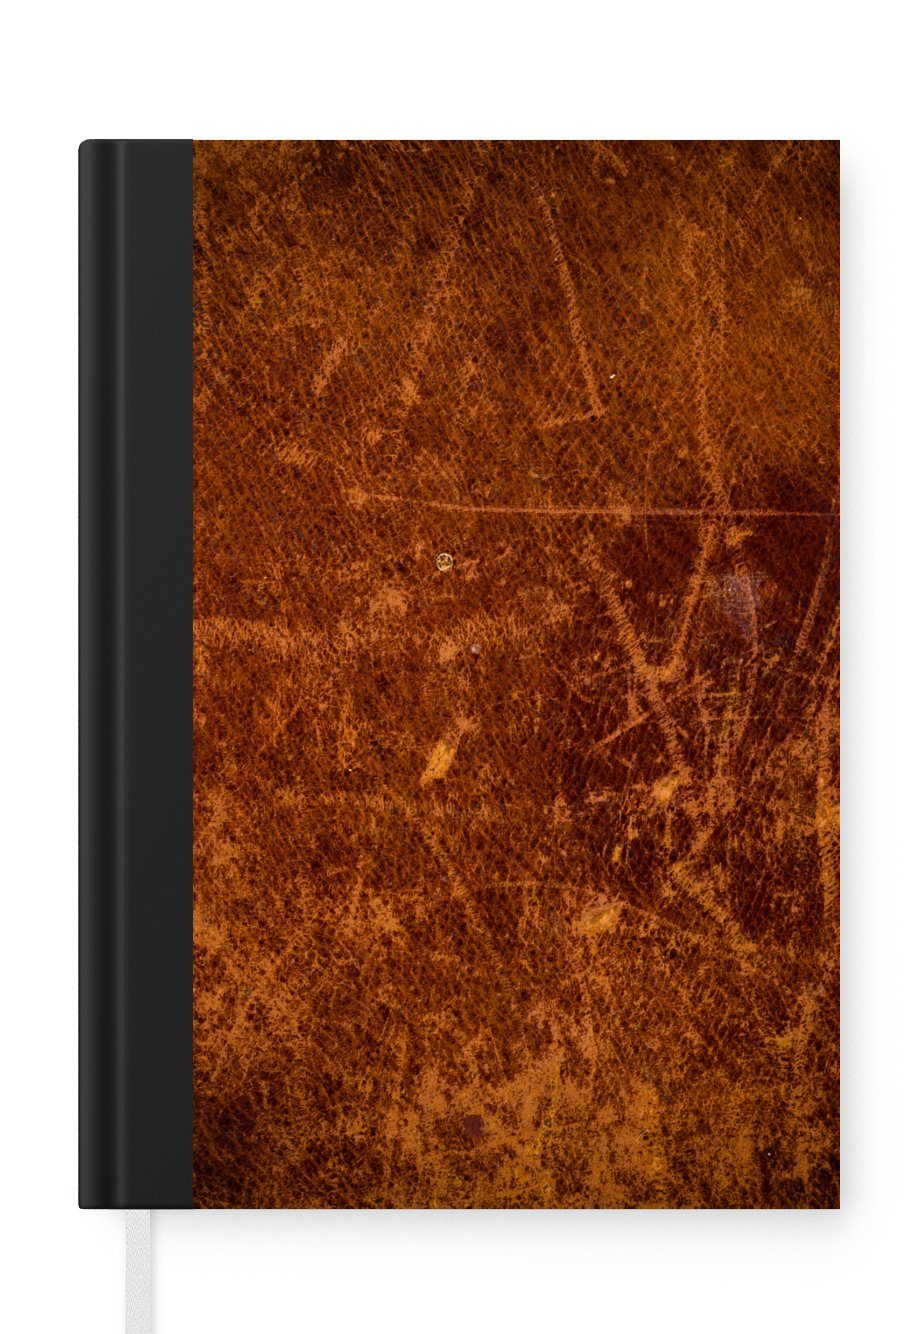 Leder Notizbuch Haushaltsbuch - Lederoptik - Orange, 98 Notizheft, A5, Merkzettel, Braun Journal, Seiten, - MuchoWow Tagebuch,